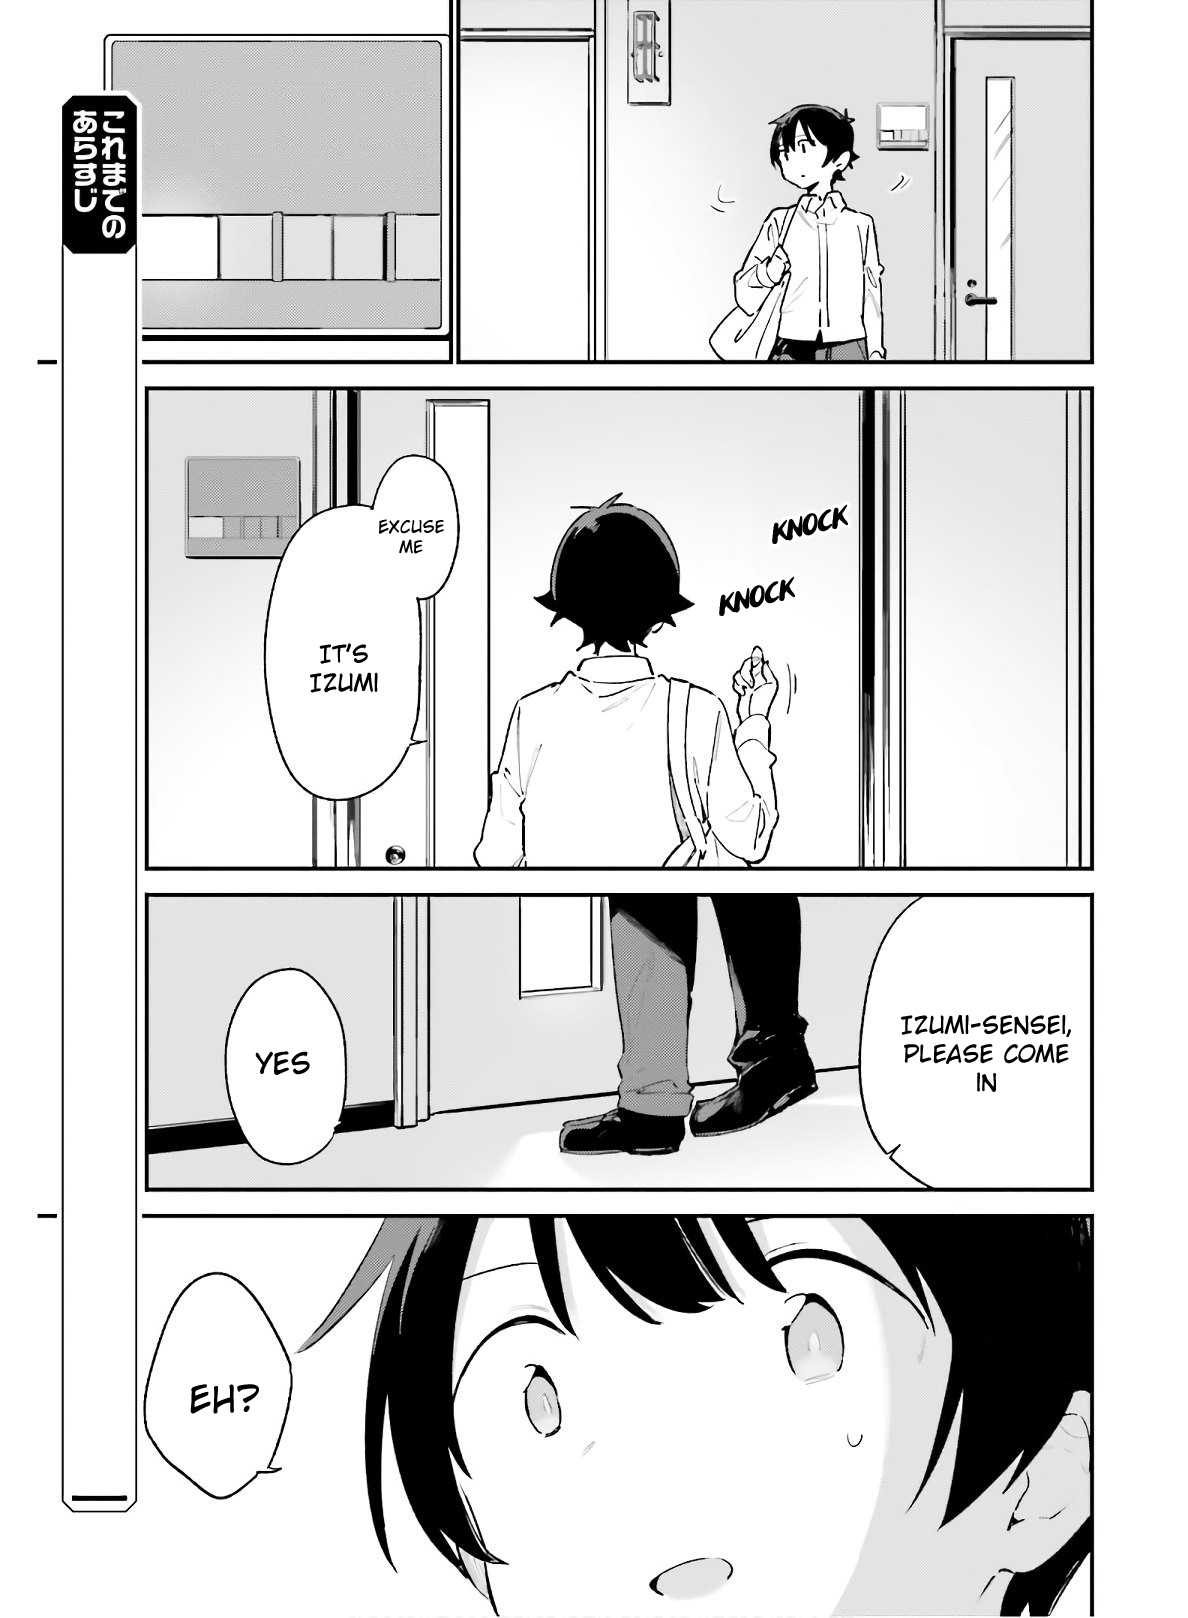 Ero Manga Sensei - 73 page 3